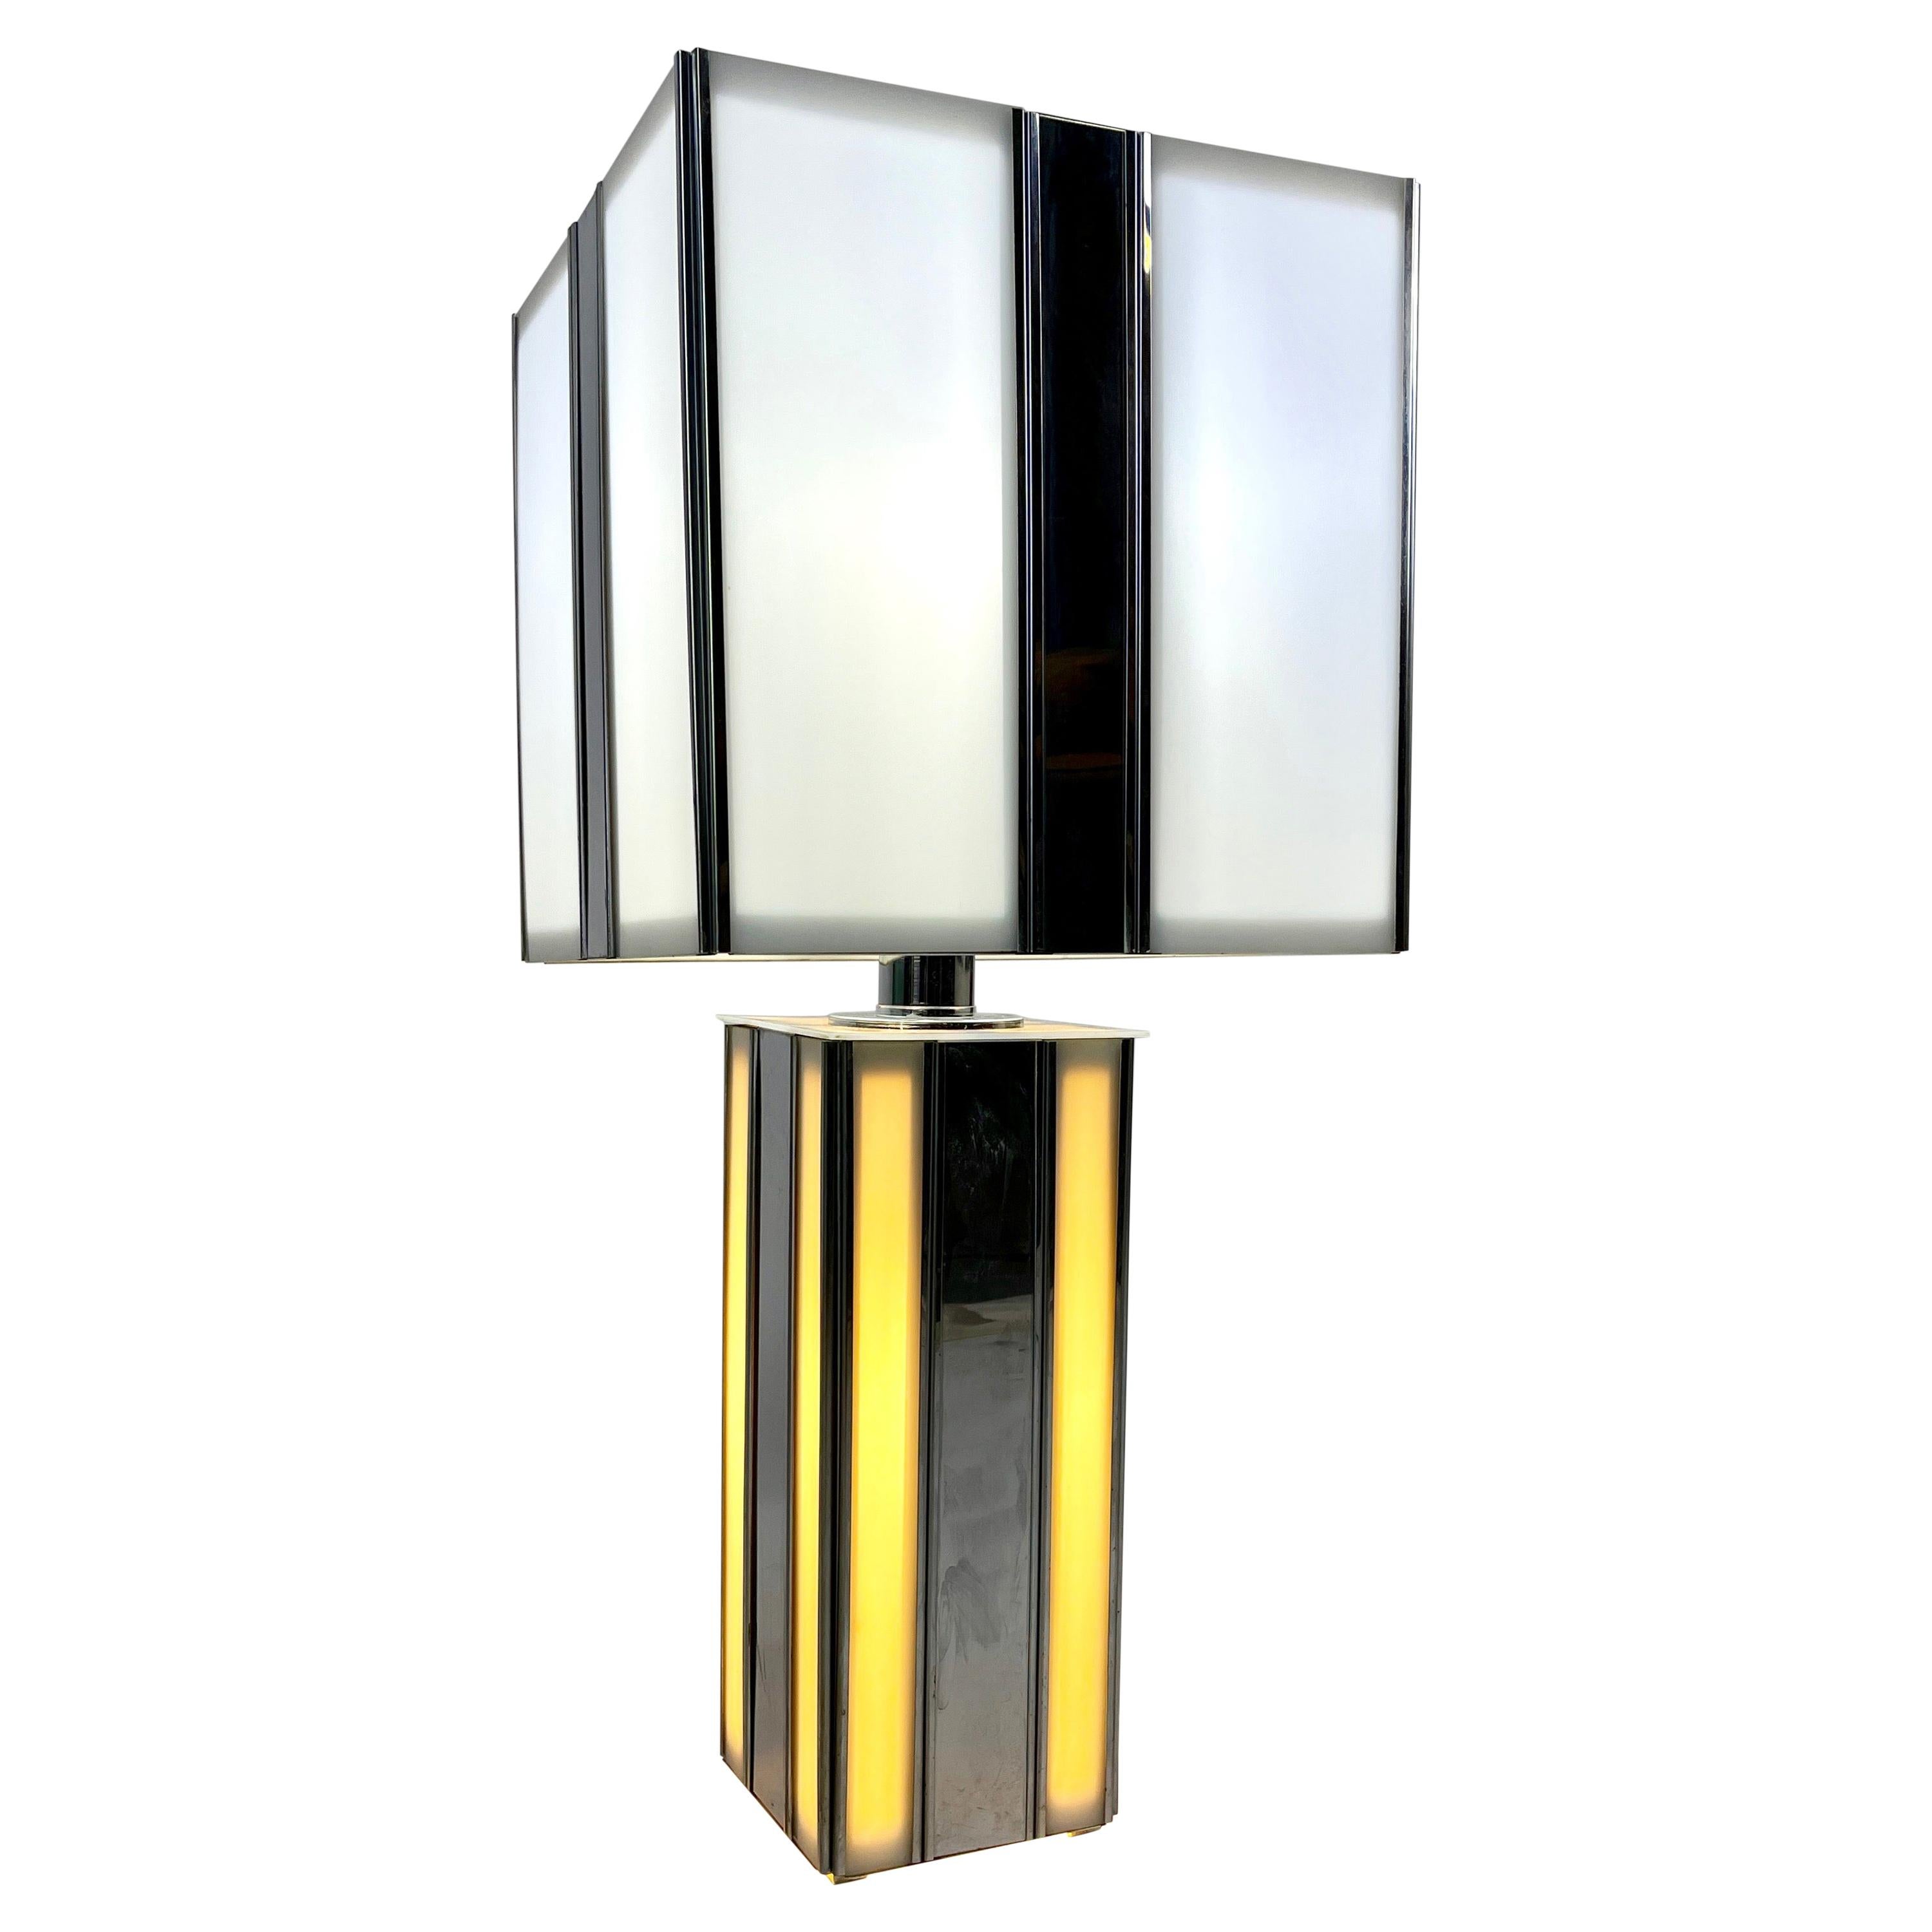 1970s Modernist Chrome and Plexiglass Dual Action Lamp